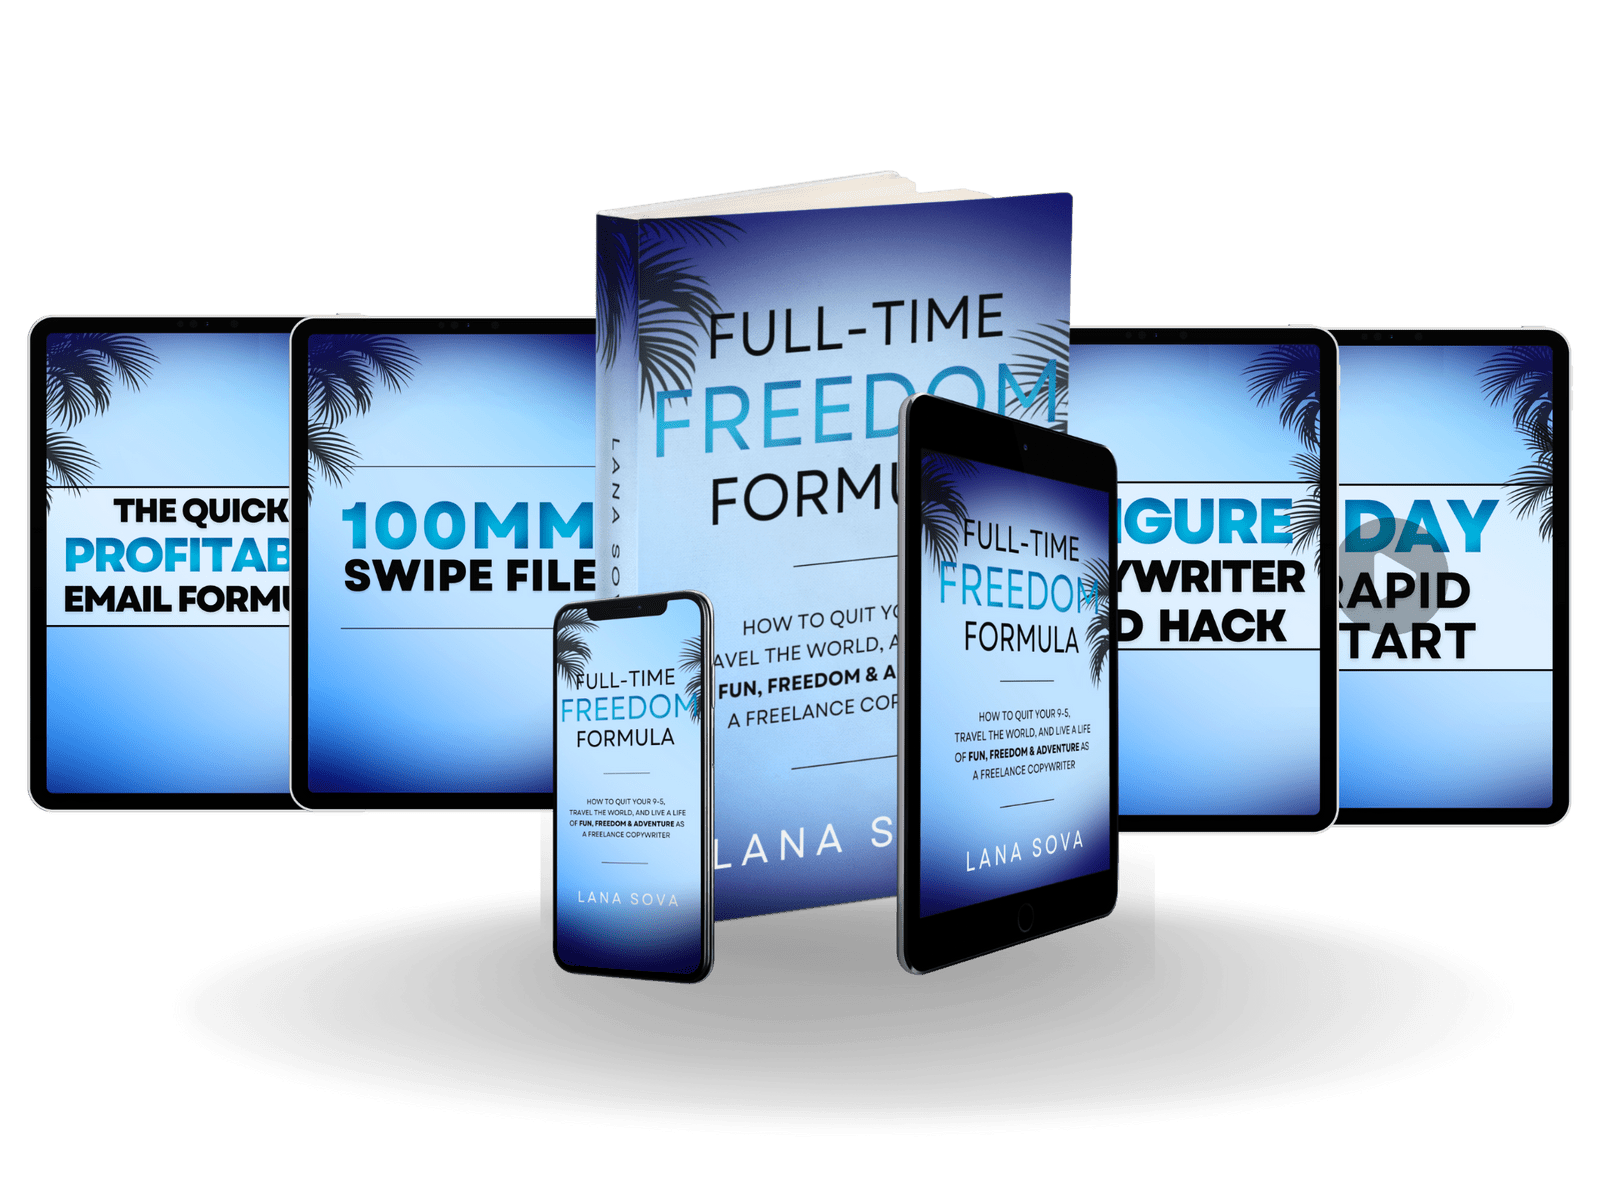 Lana Sova – Full-Time Freedom Formula Download